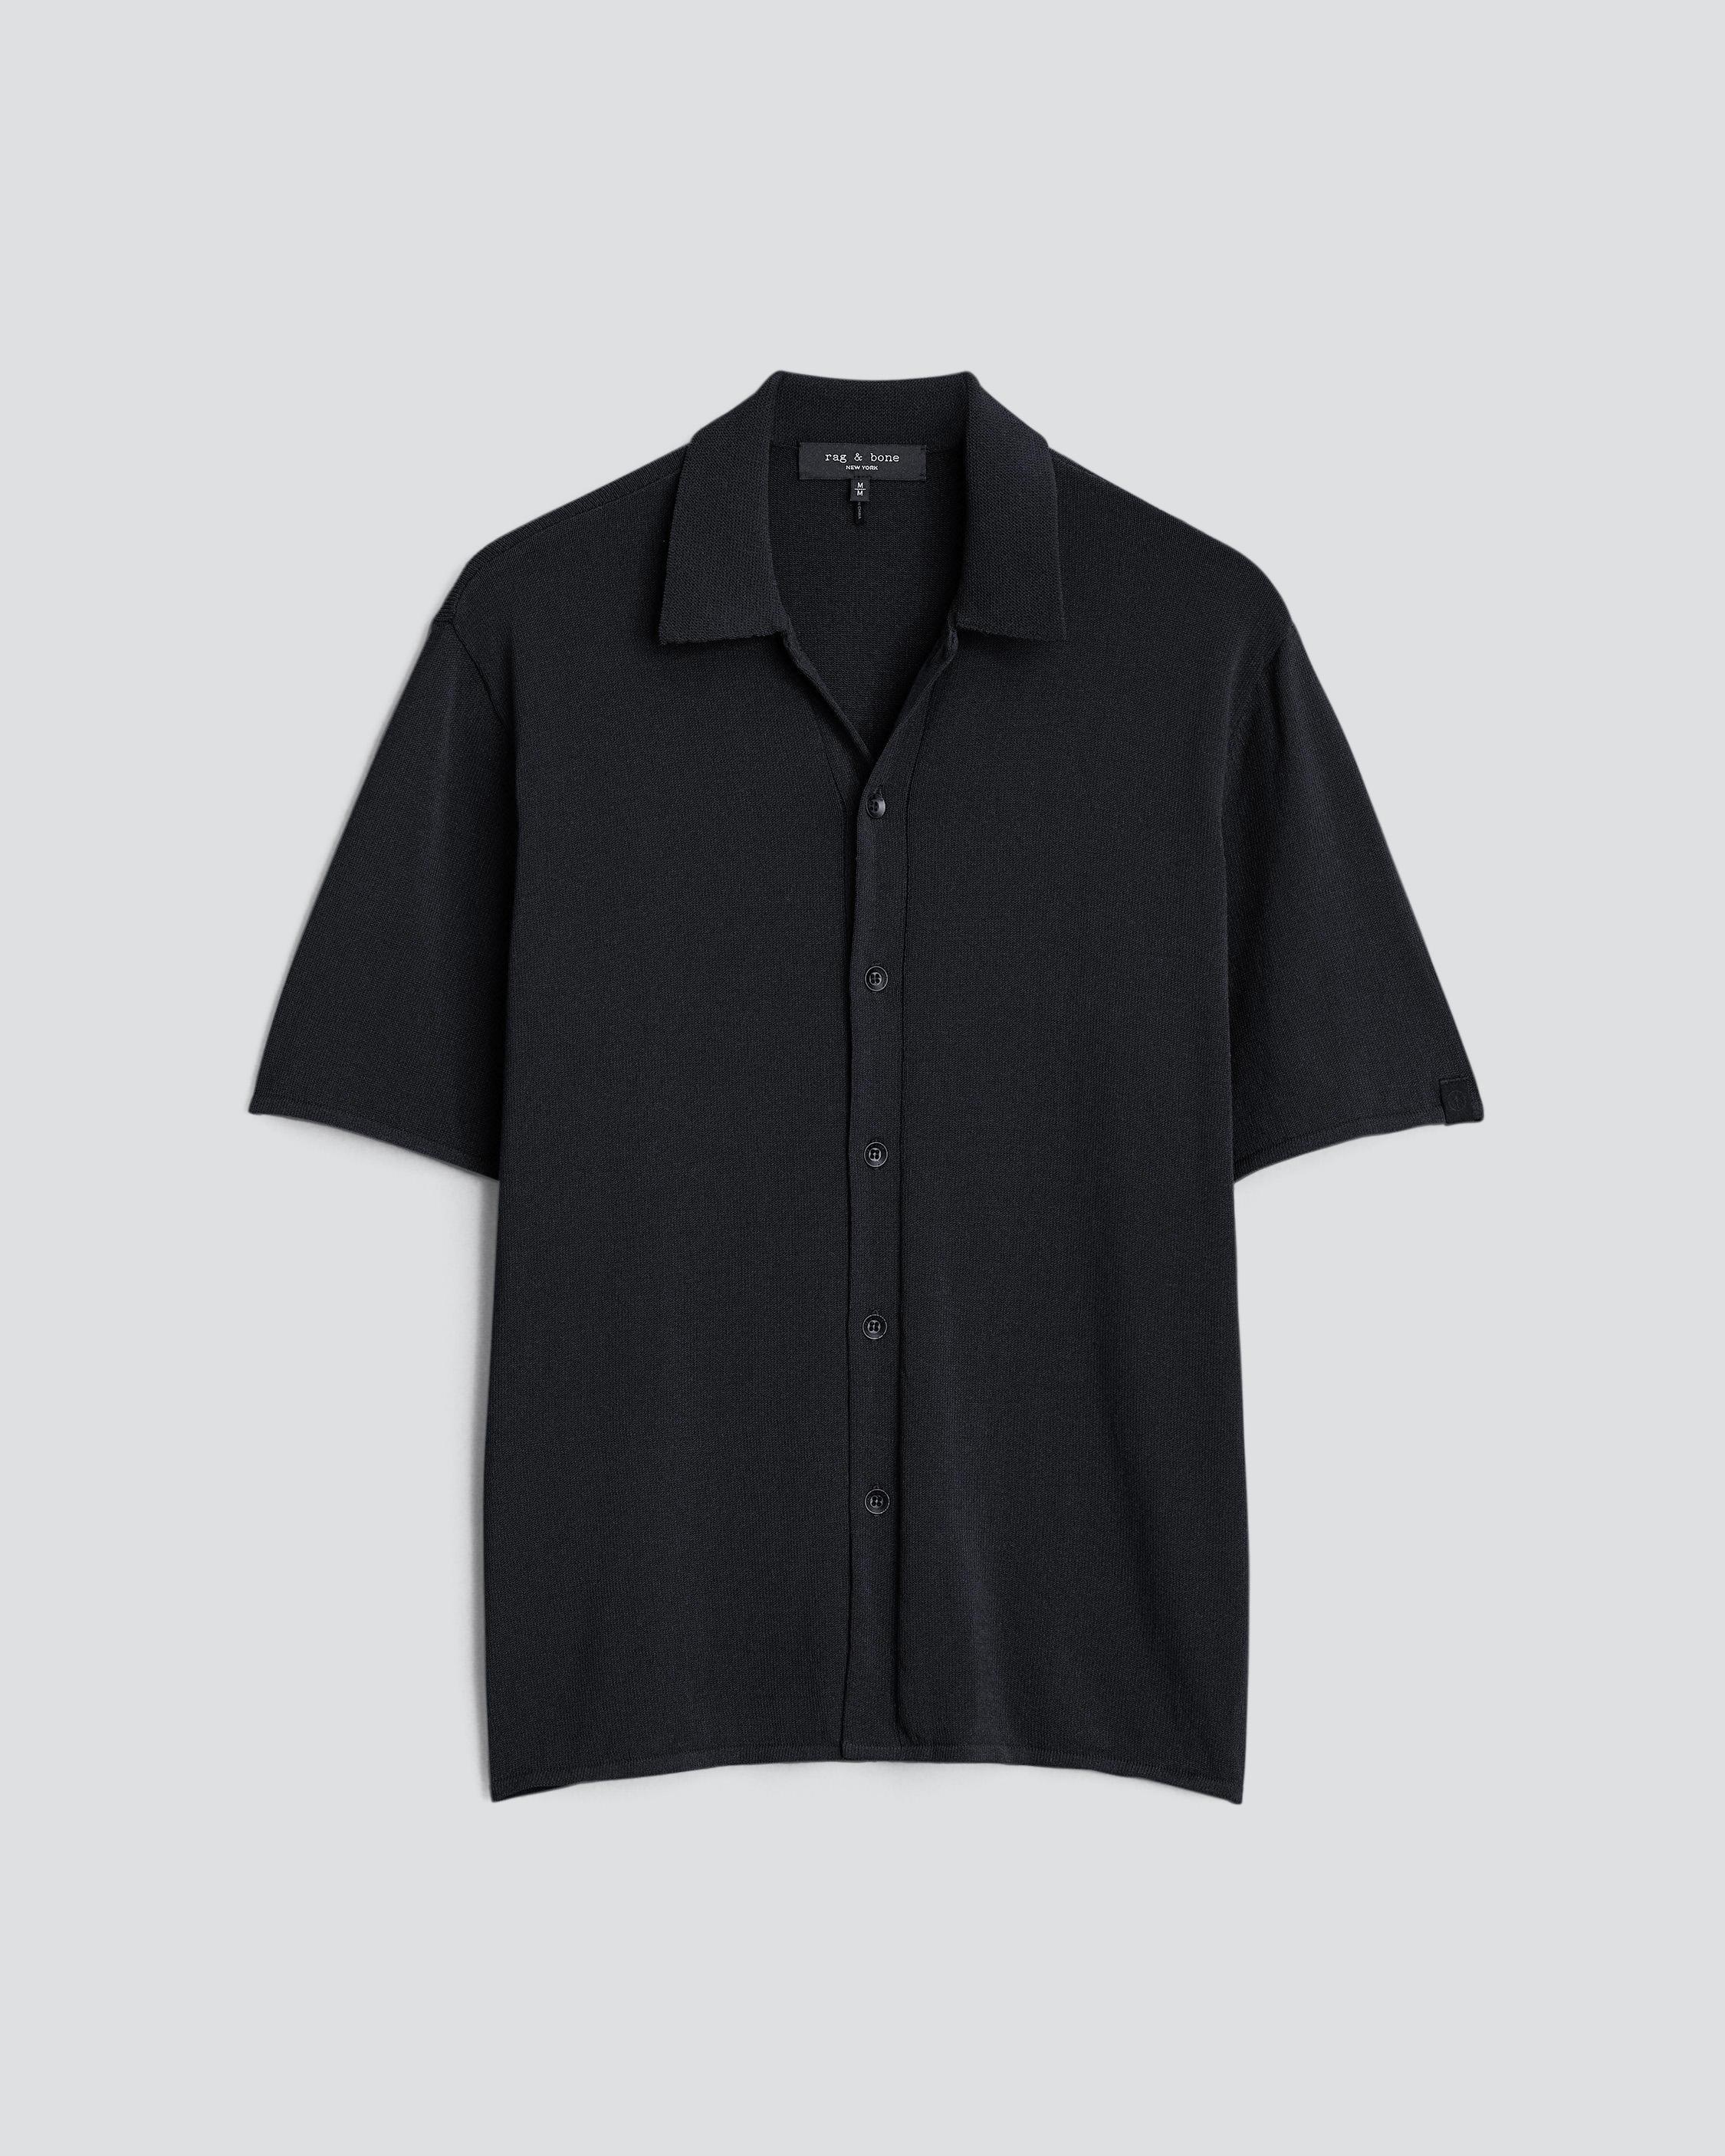 Nolan Corded Cotton Shirt
Classic Fit Button Down Shirt - 1